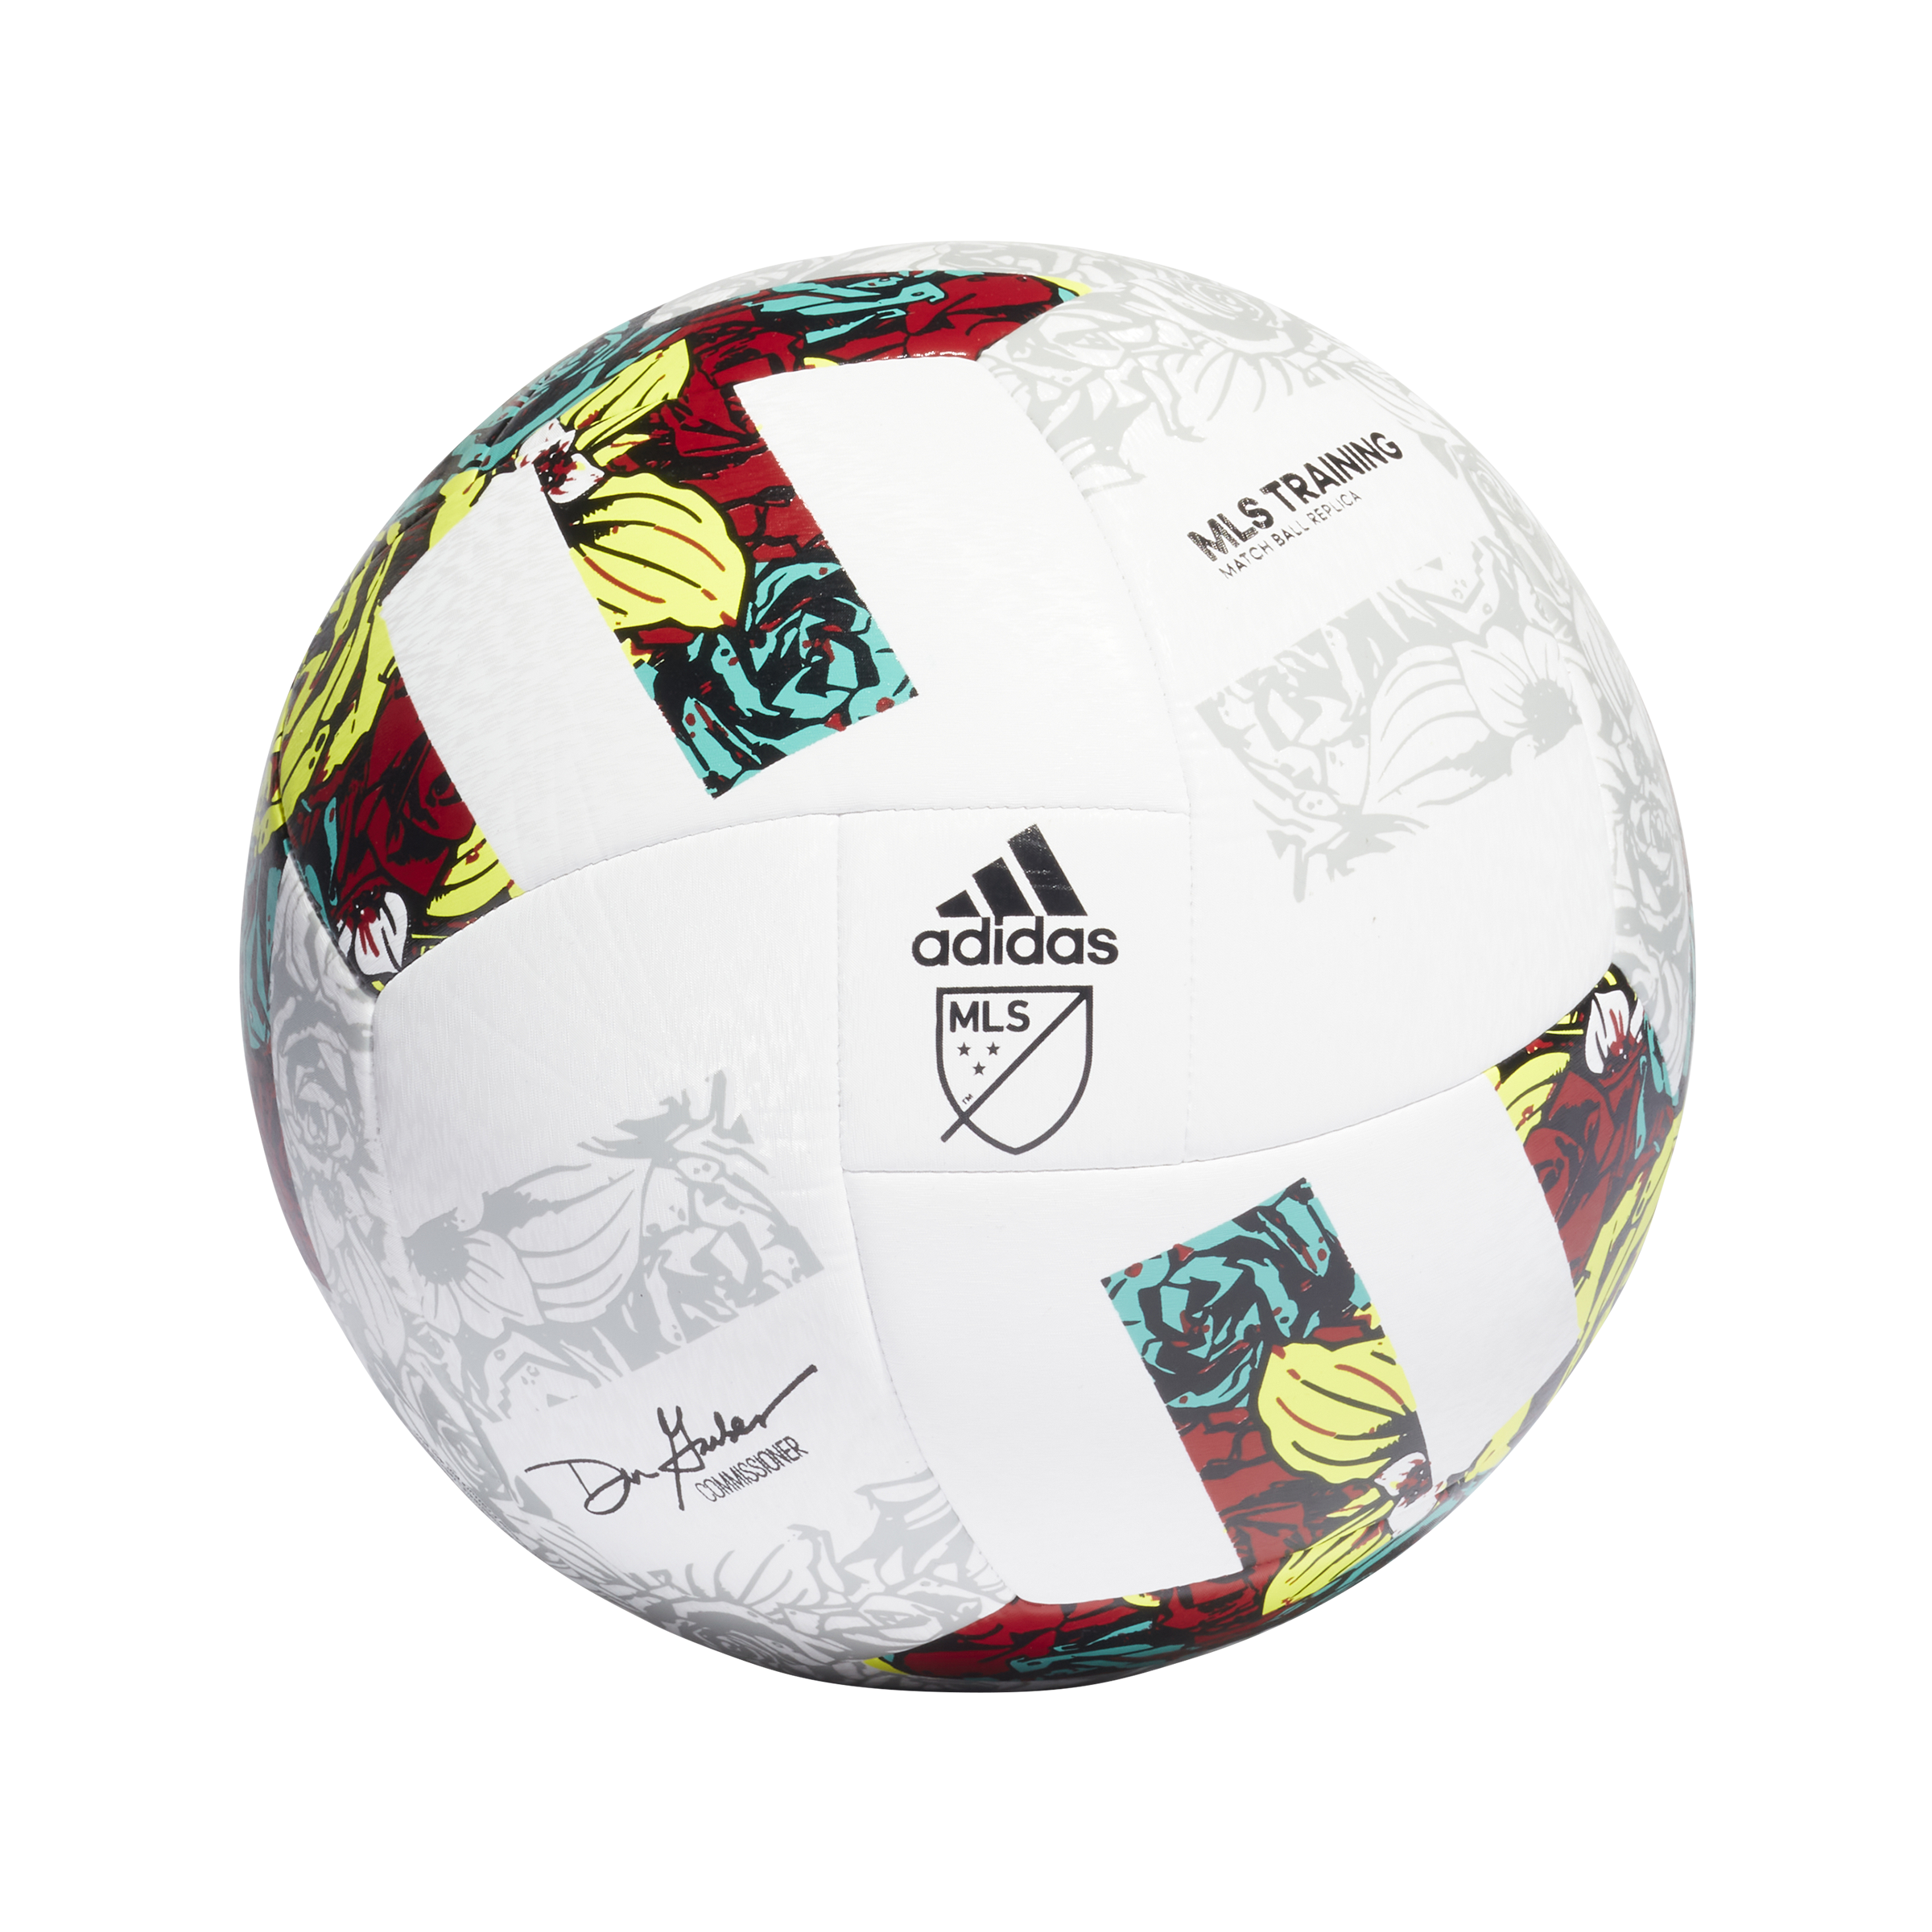 Adidas MLS Training Ball - GK3501